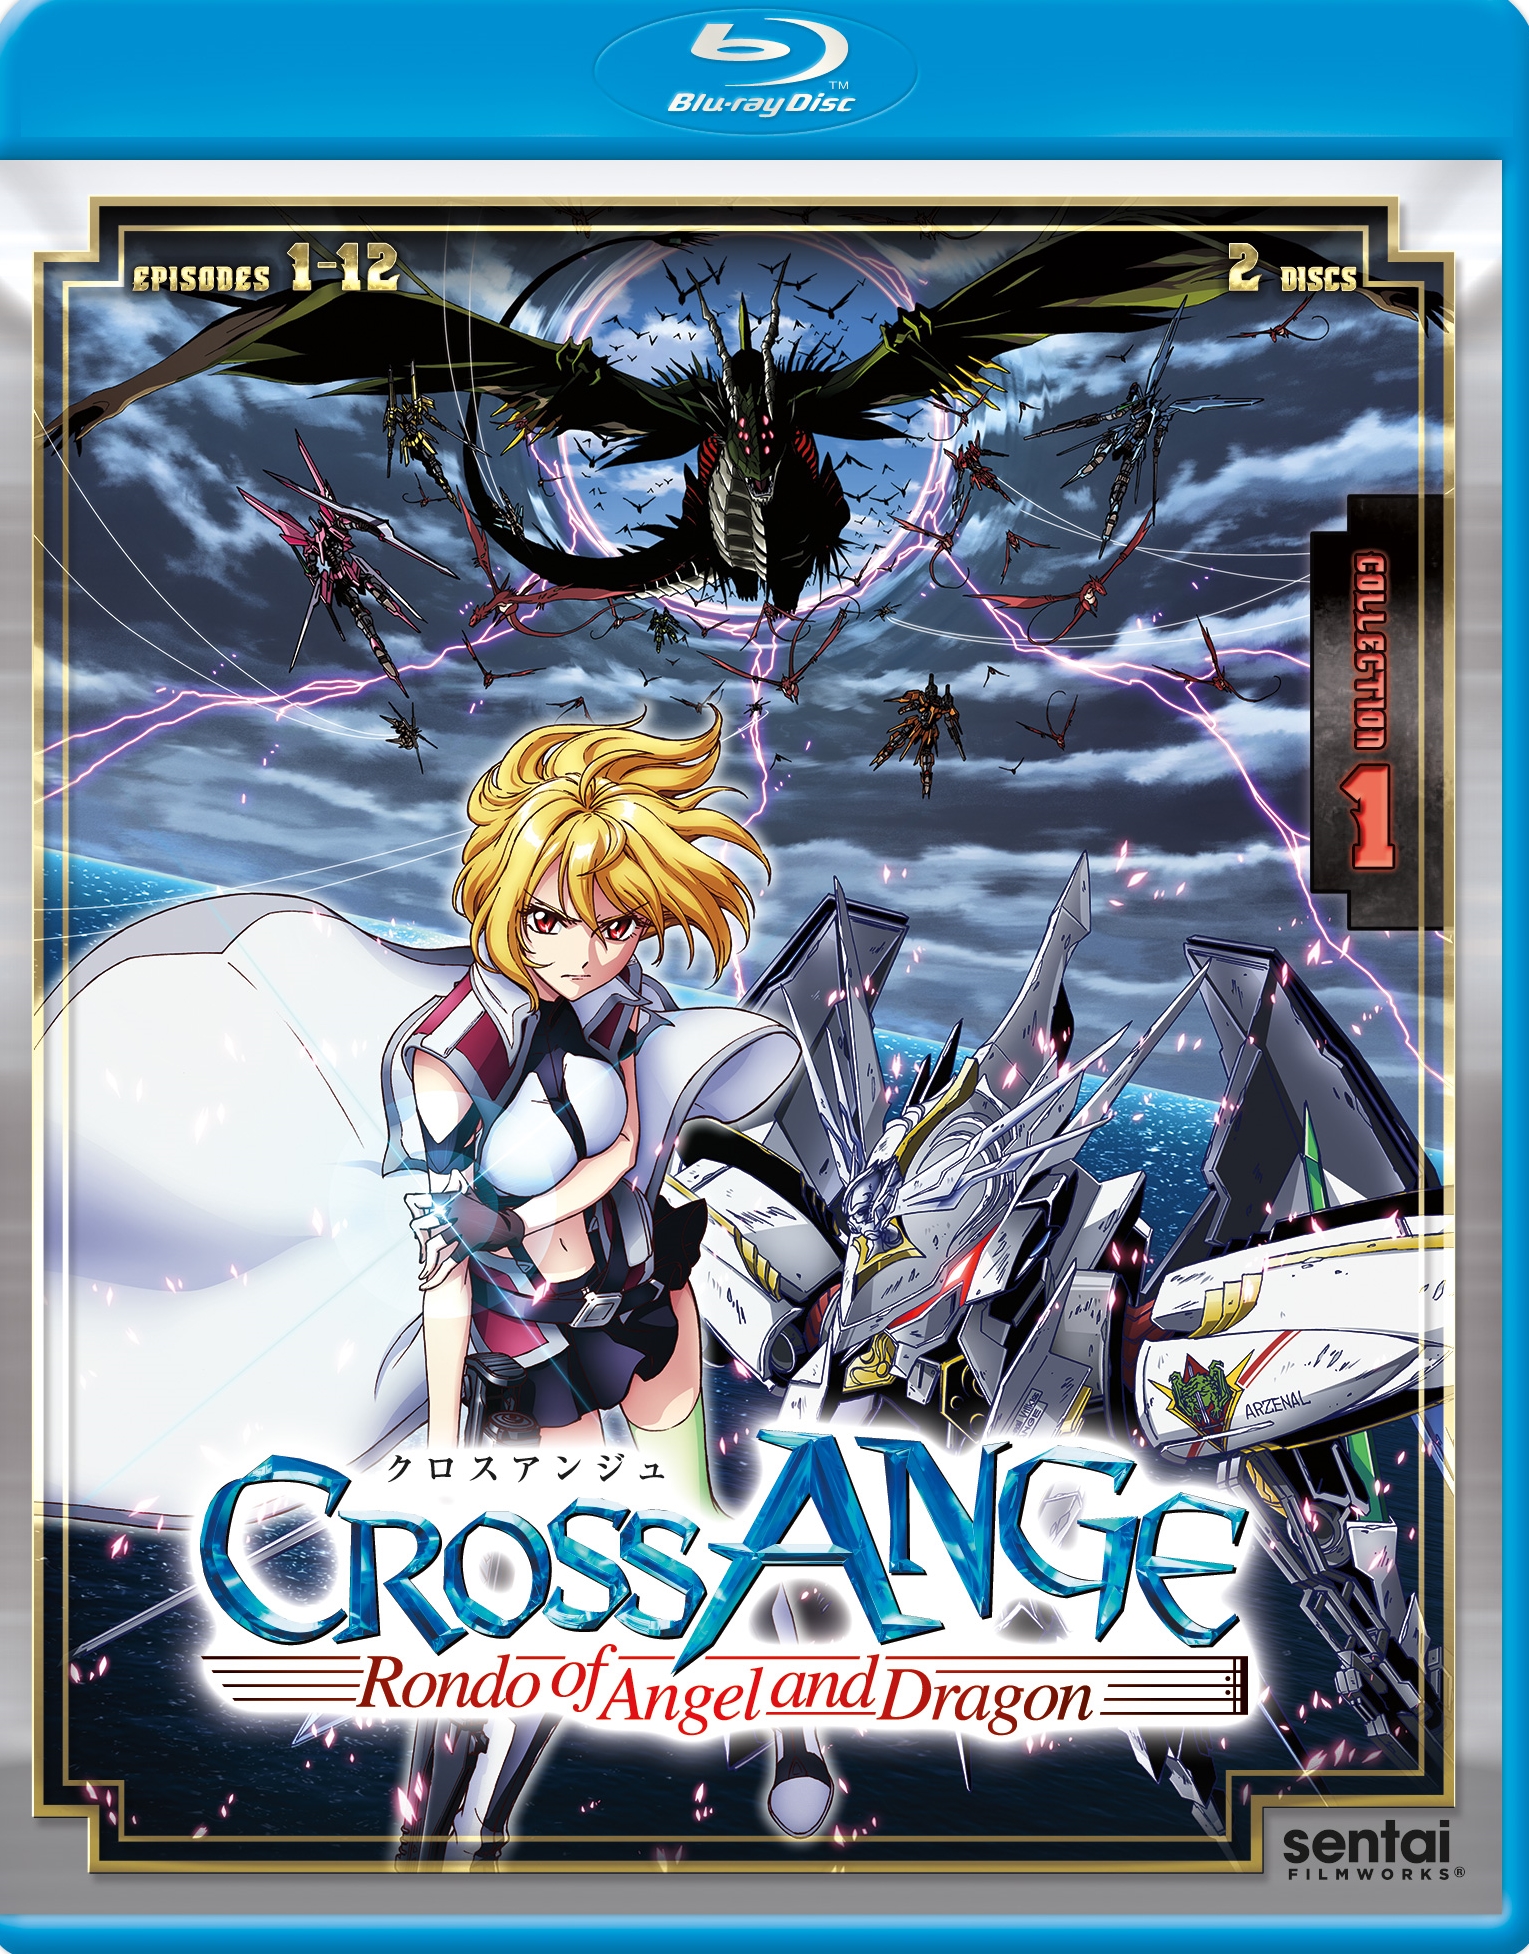 CROSS ANGE Rondo of Angel and Dragon